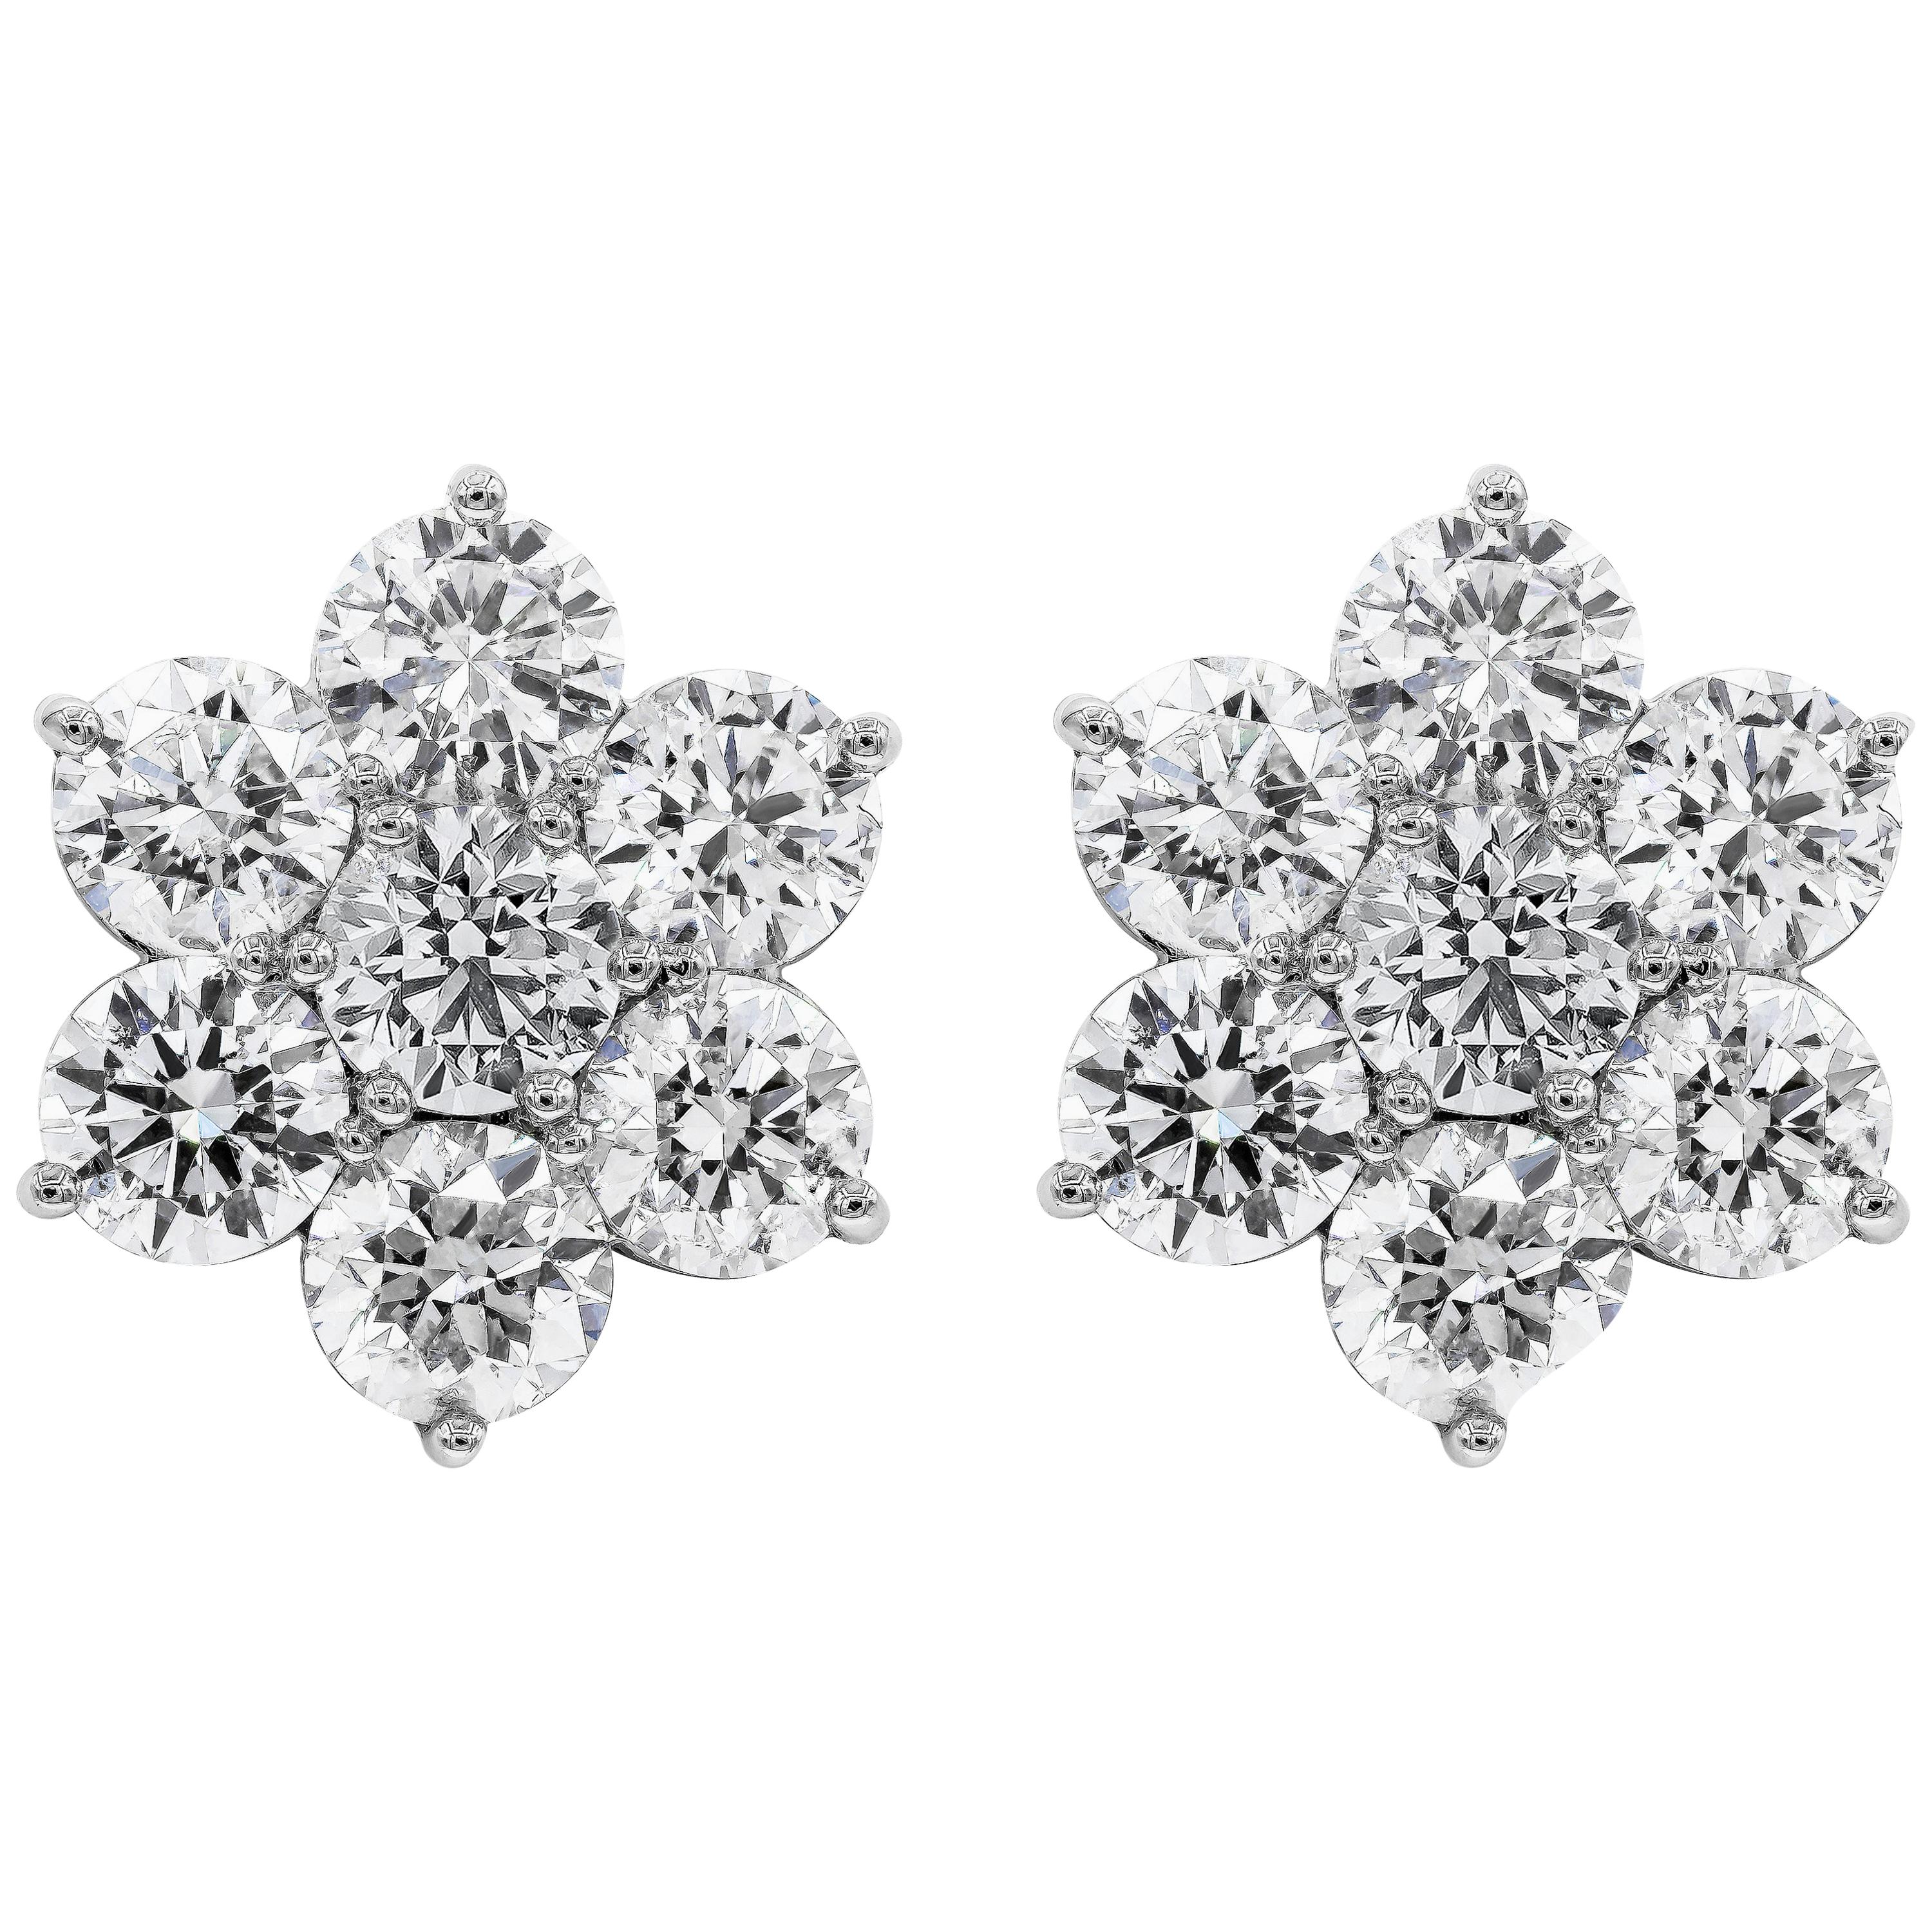 Roman Malakov 7.48 Carats Total Brilliant Round Cut Diamond Flower Stud Earrings